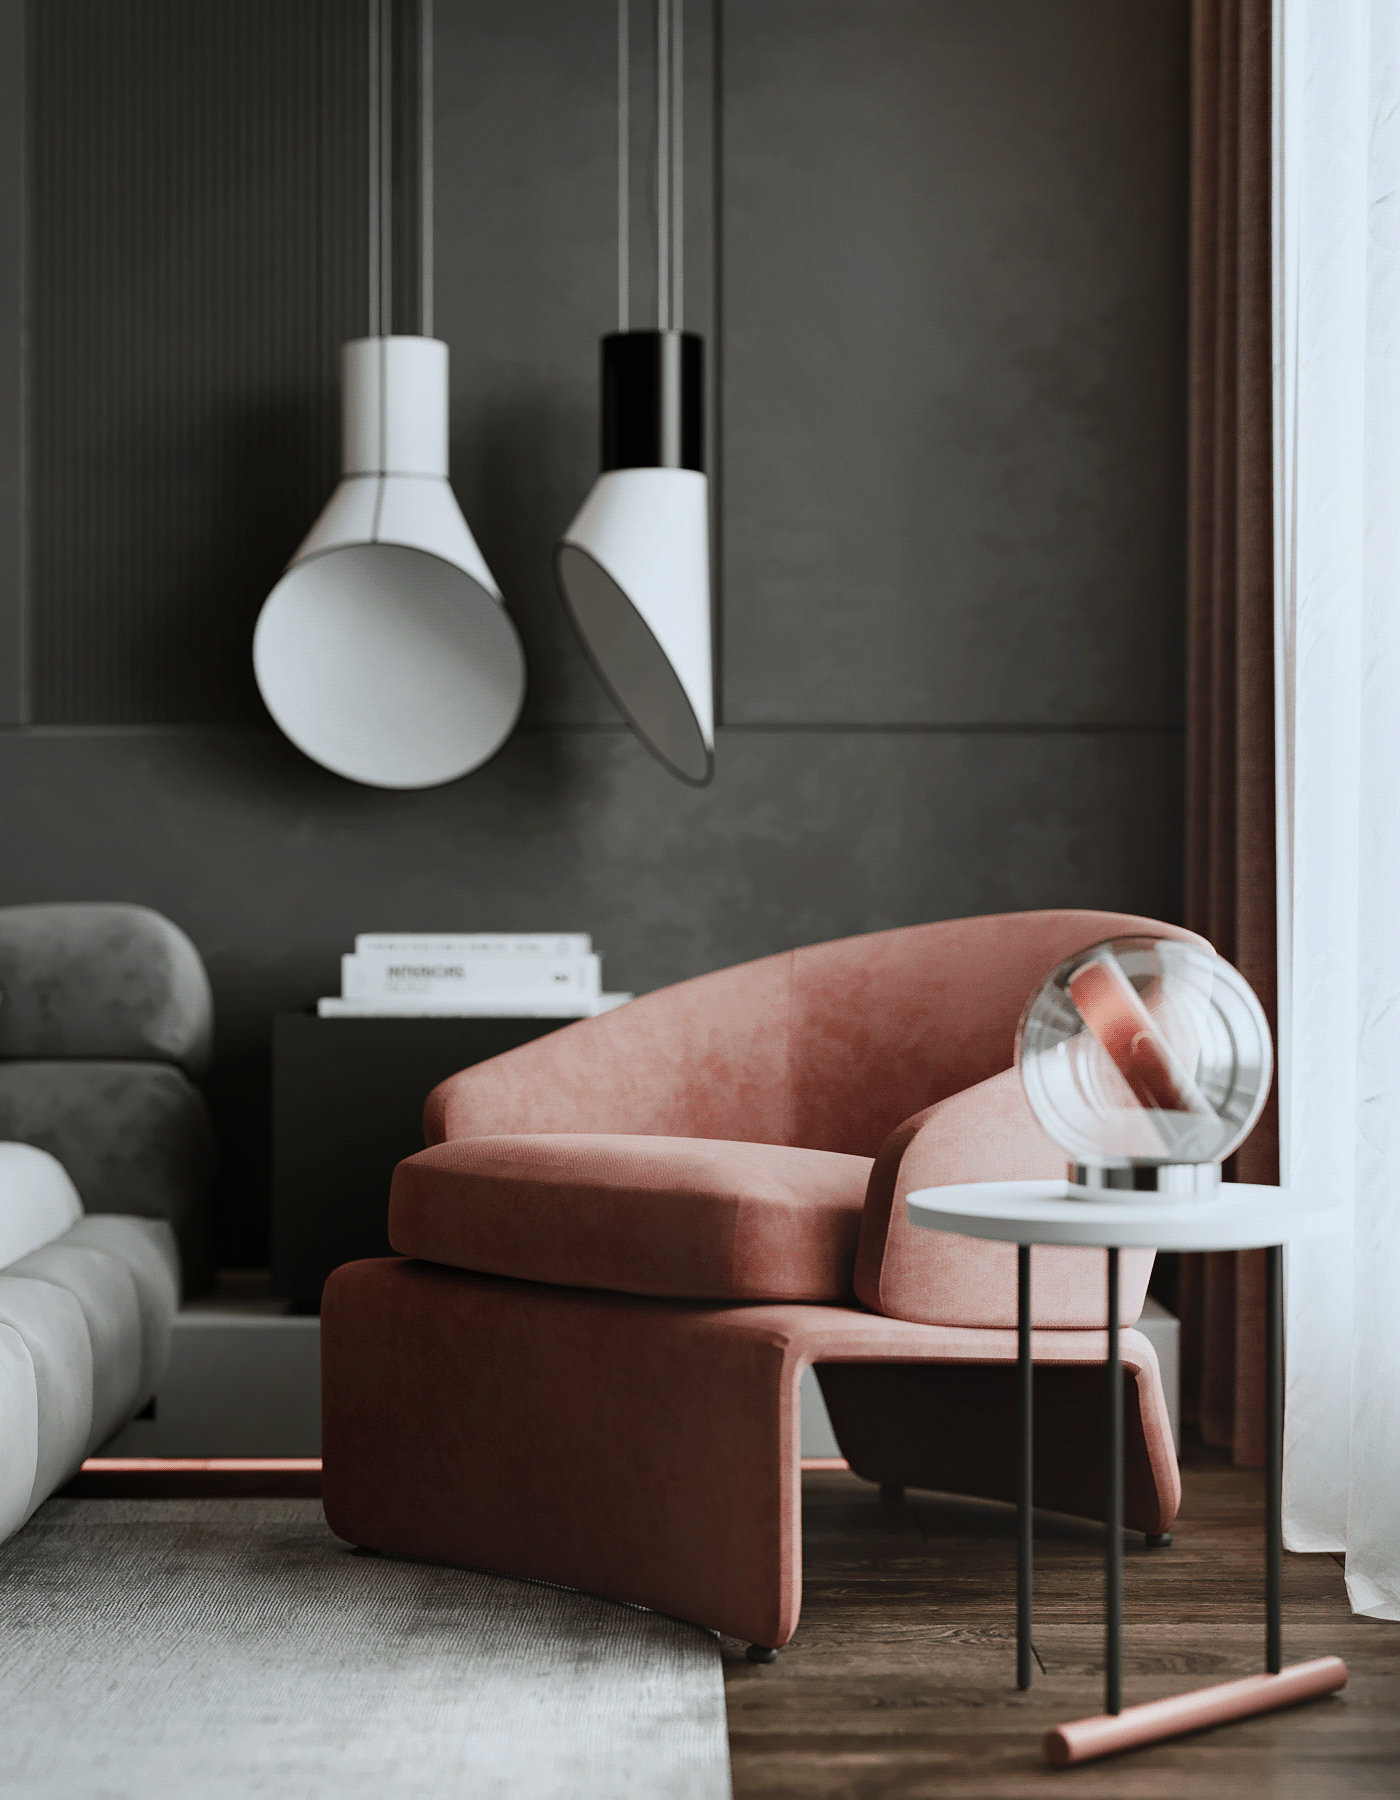 3dmax architecture Bedrooms corona render  Interior modern designs